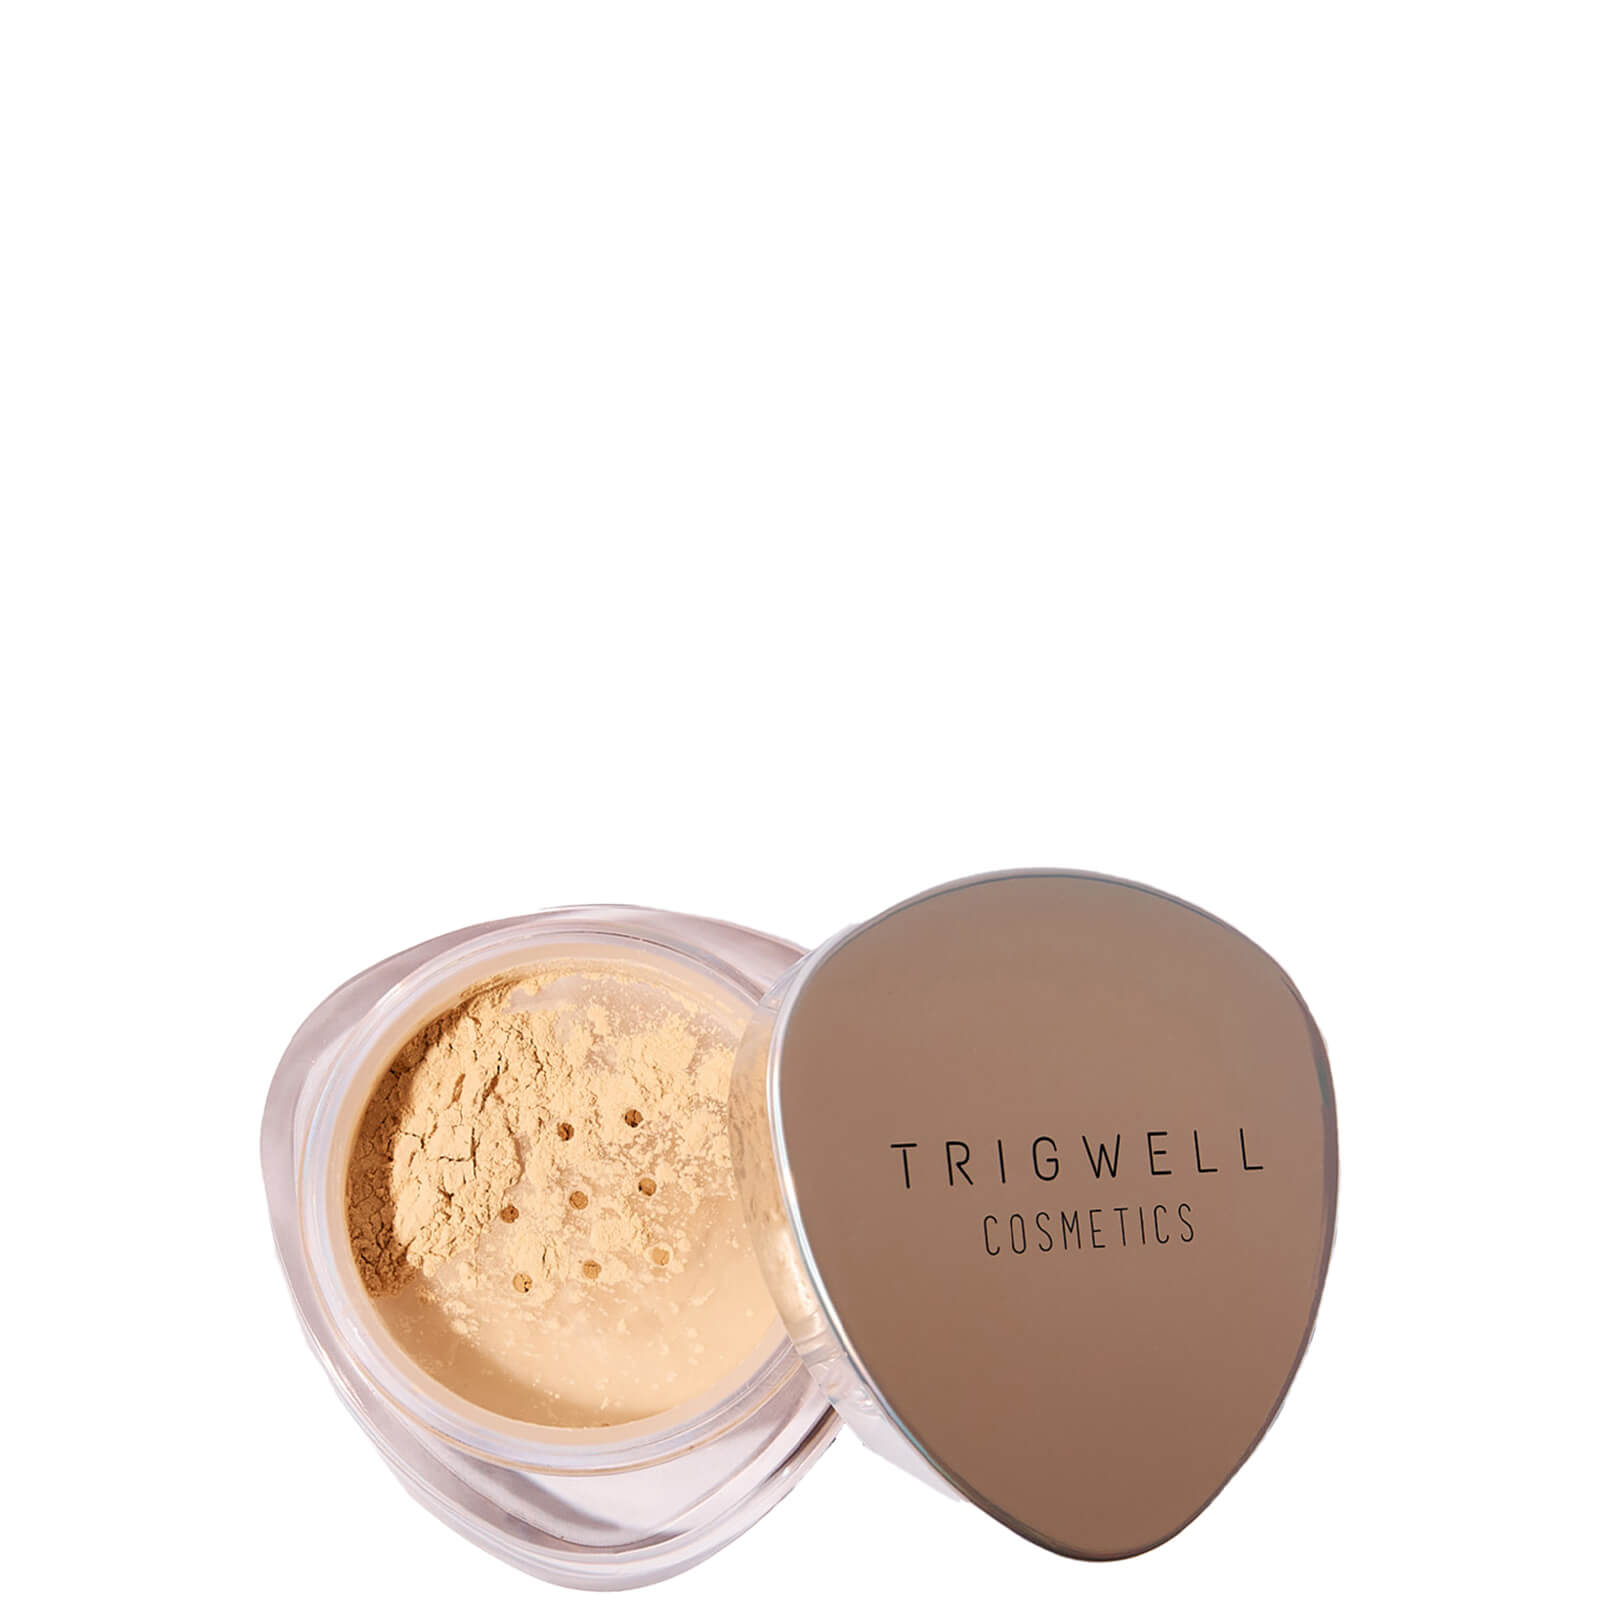 Trigwell Cosmetics Velvet Setting Powder 8g (various Shades) - Shade 3 In White